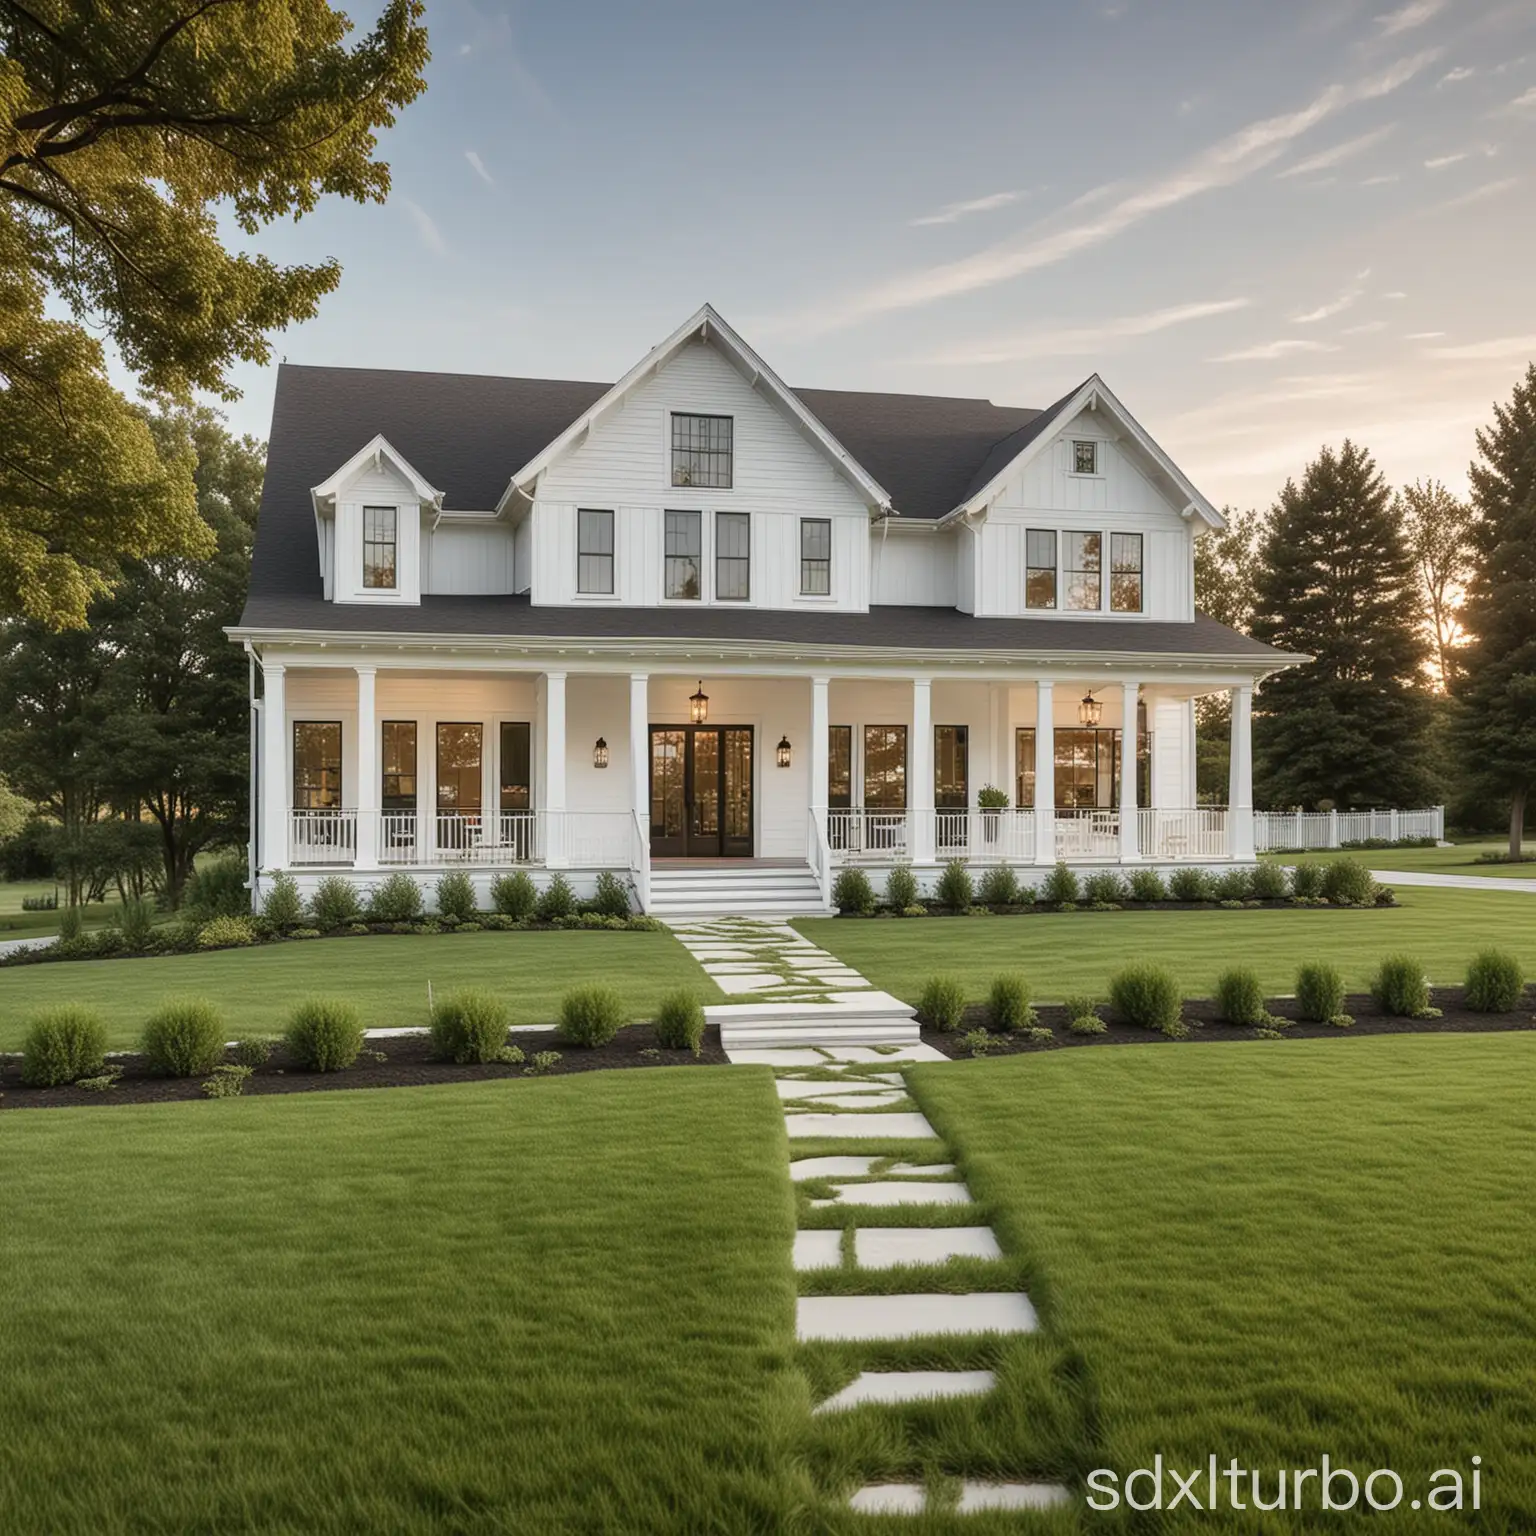 a modern American farmhouse-style villa, with a lush green lawn